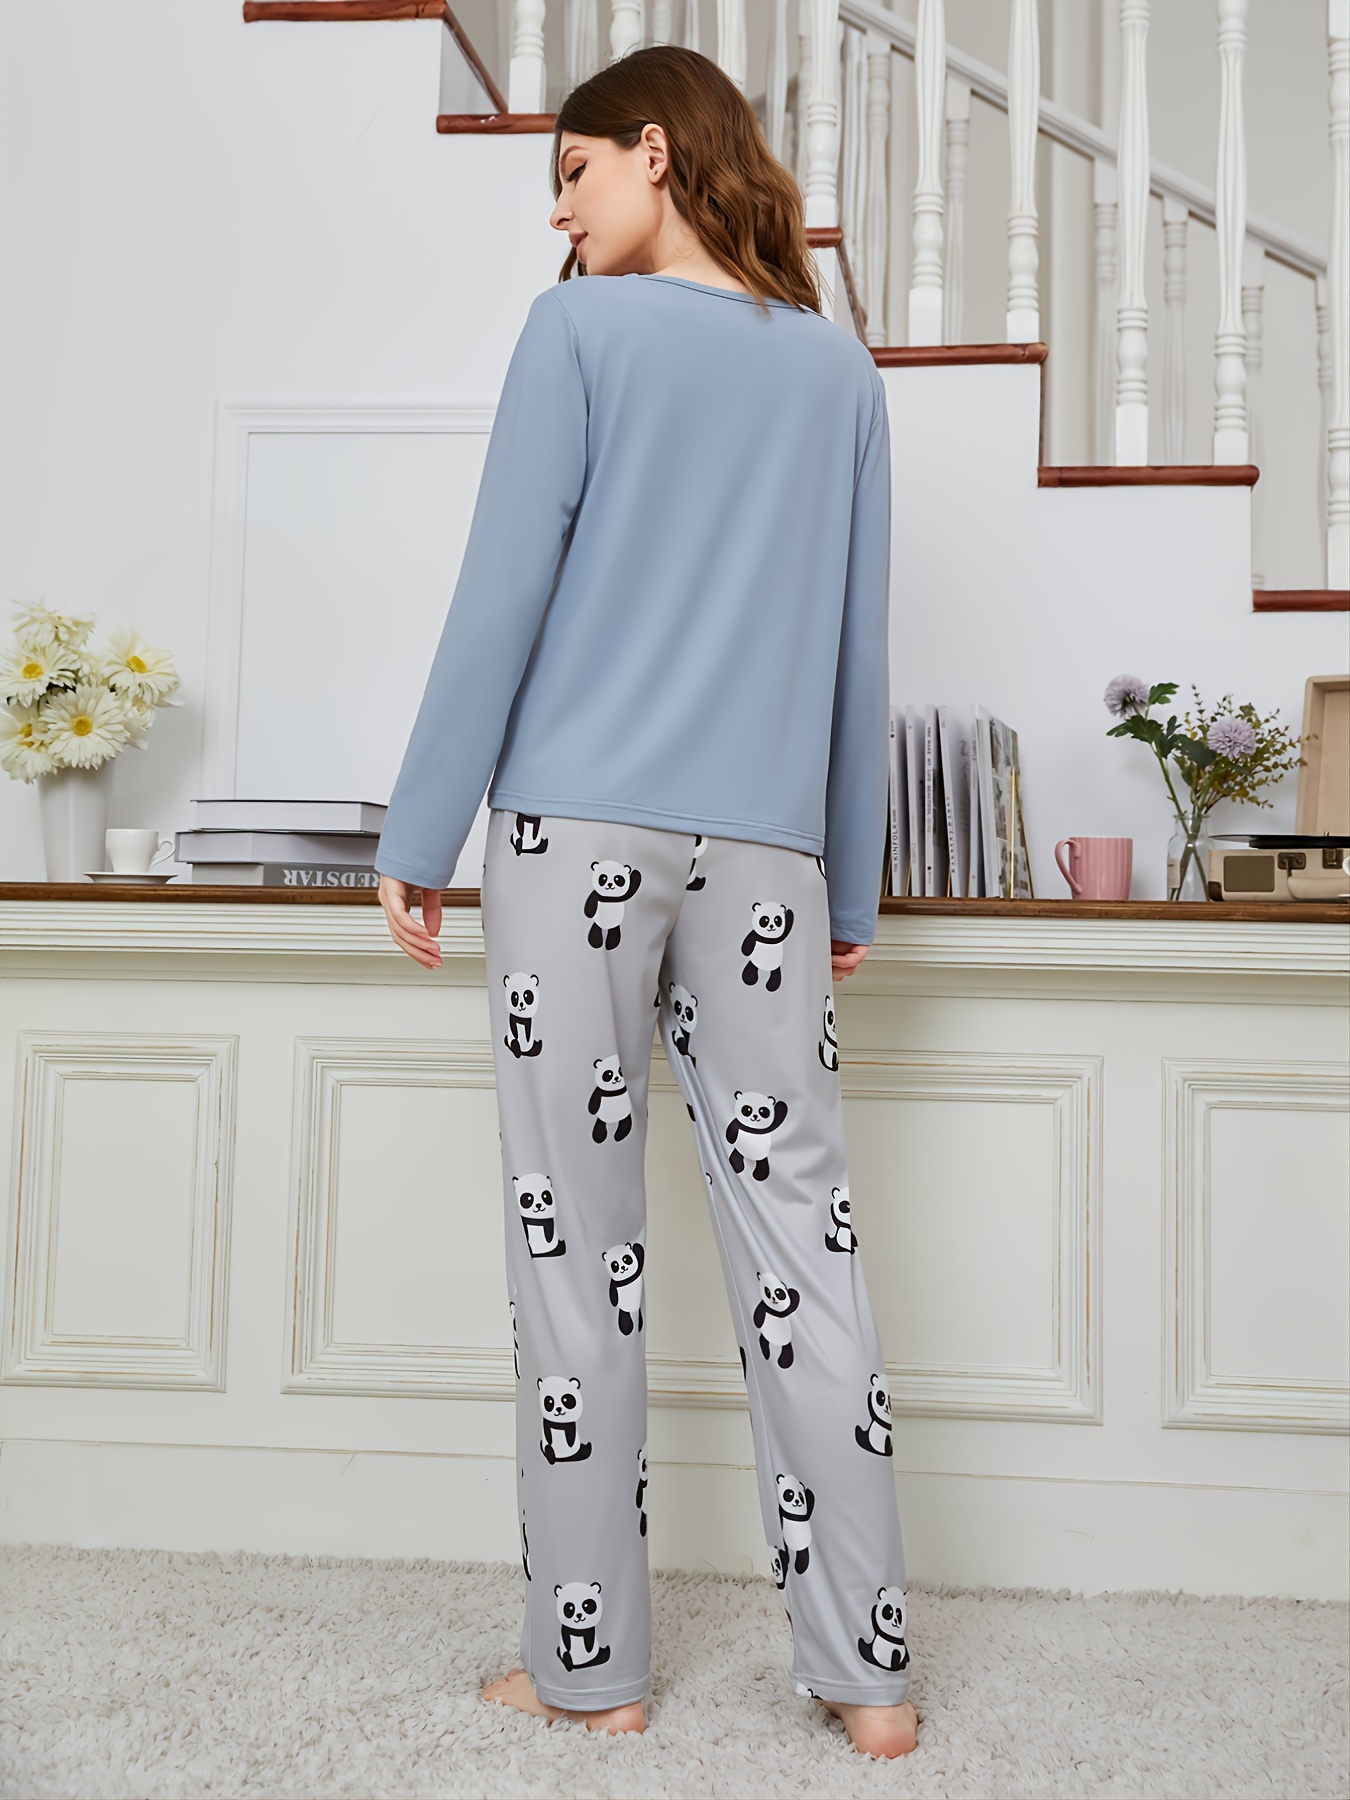 Soft & Simple Cartoon Pajama Set, Long Sleeve Tops & Pants, Comfortable &  Casual Loungewear, Women's Sleepwear